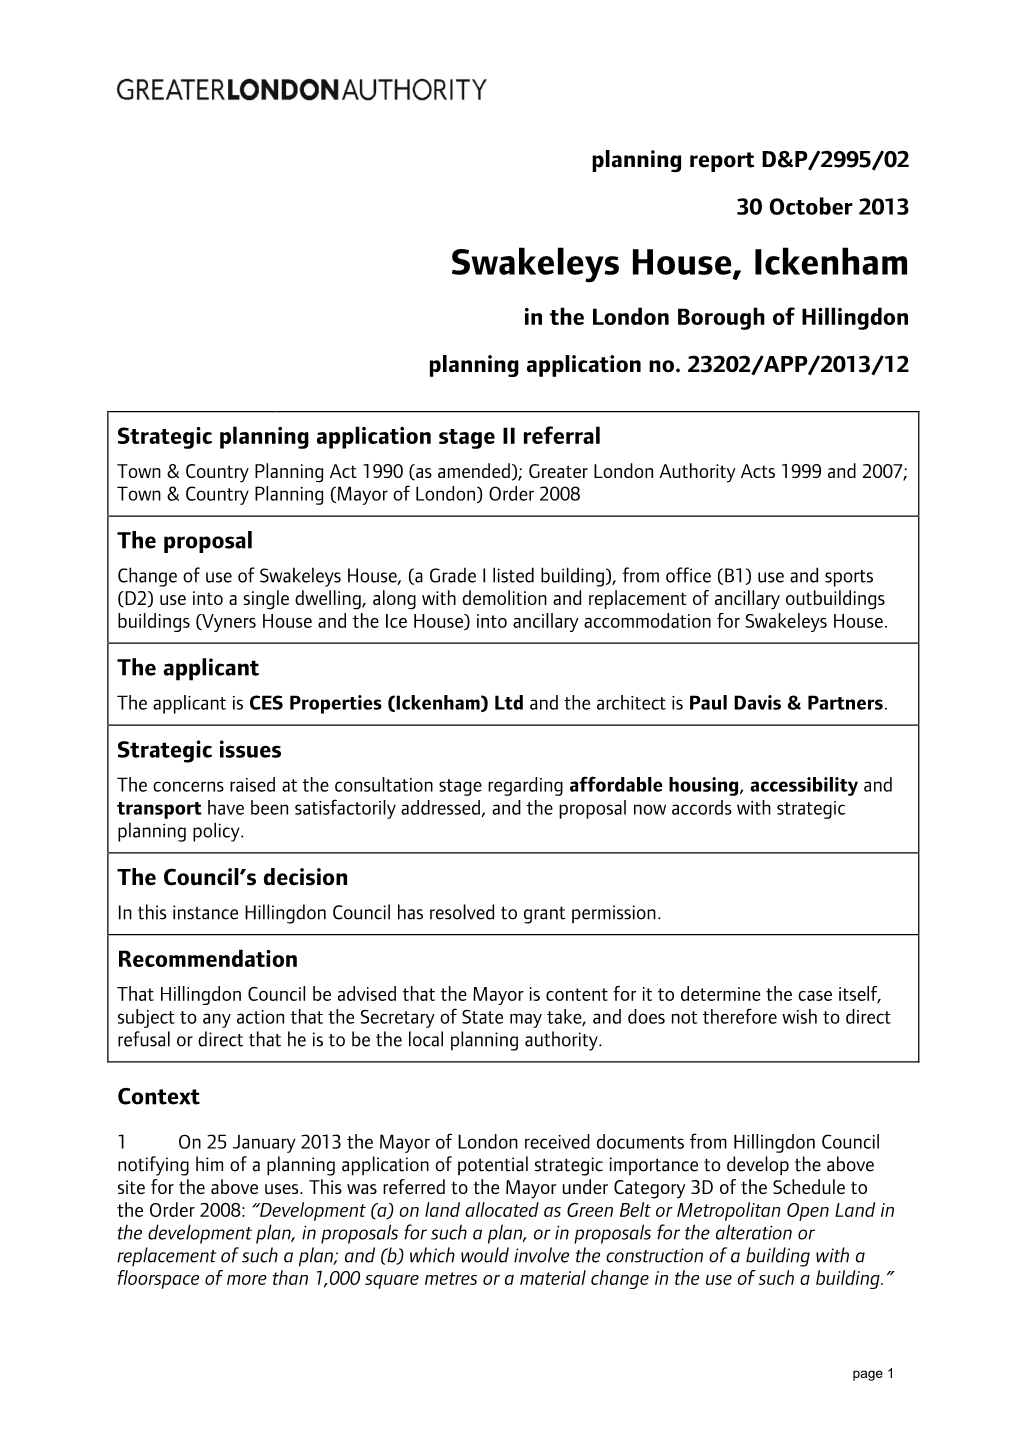 Swakeleys House, Ickenham in the London Borough of Hillingdon Planning Application No